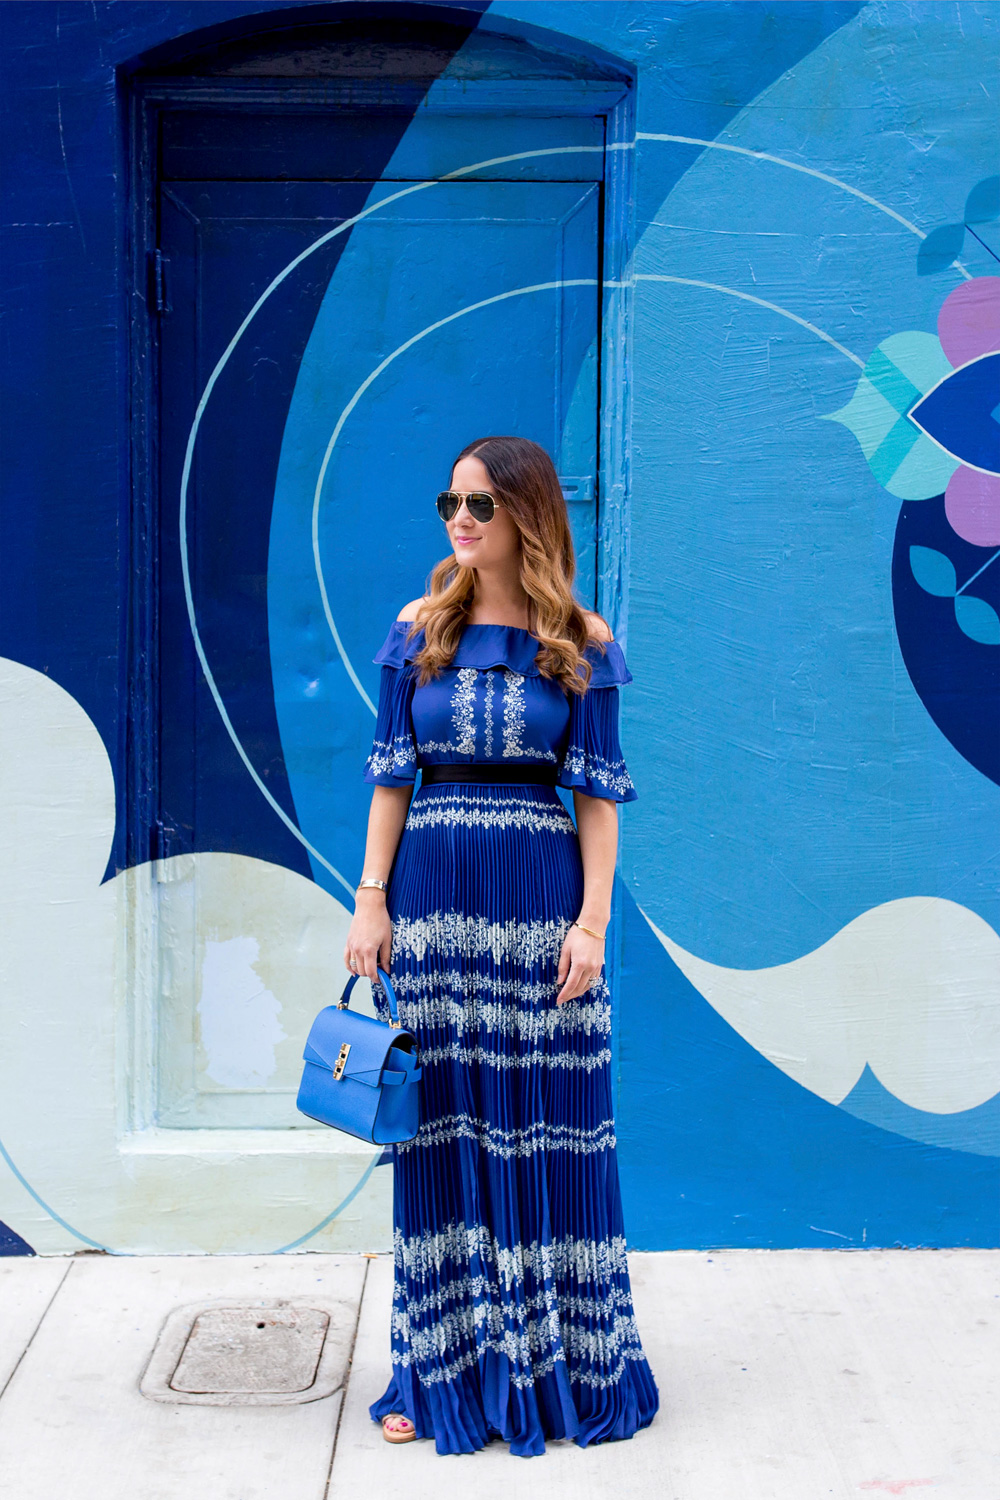 Jennifer Lake Style Charade wearing a blue pleated Self Portrait maxi dress, and blue Henri Bendel bag at a blue swirl mural wall